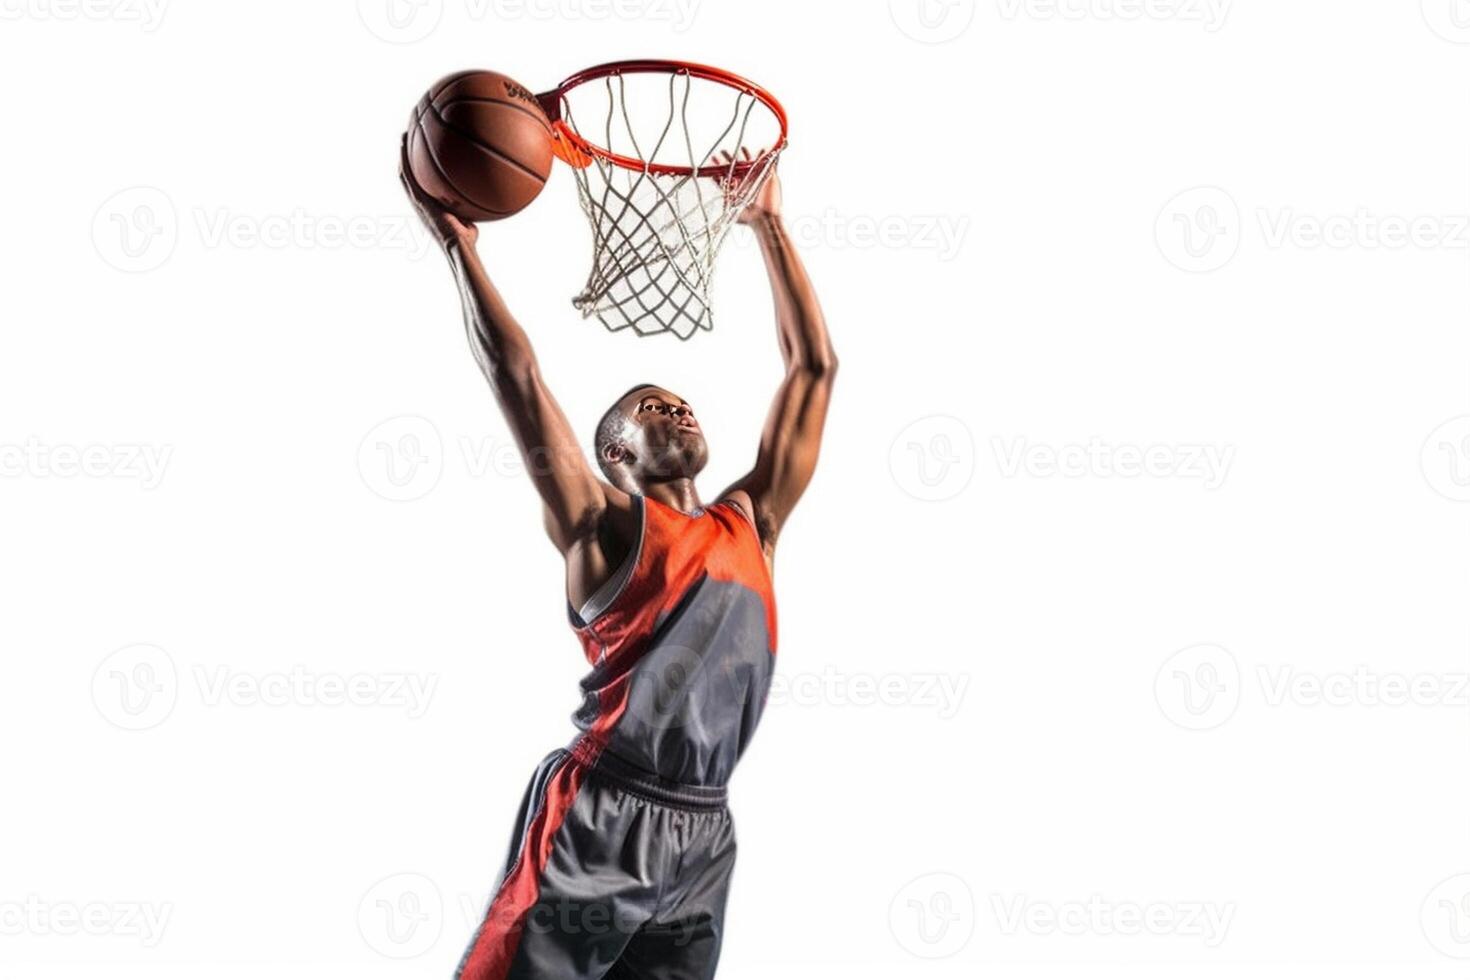 AI Generative Professional slam dunk Basketball player making a rear slam dunk photo